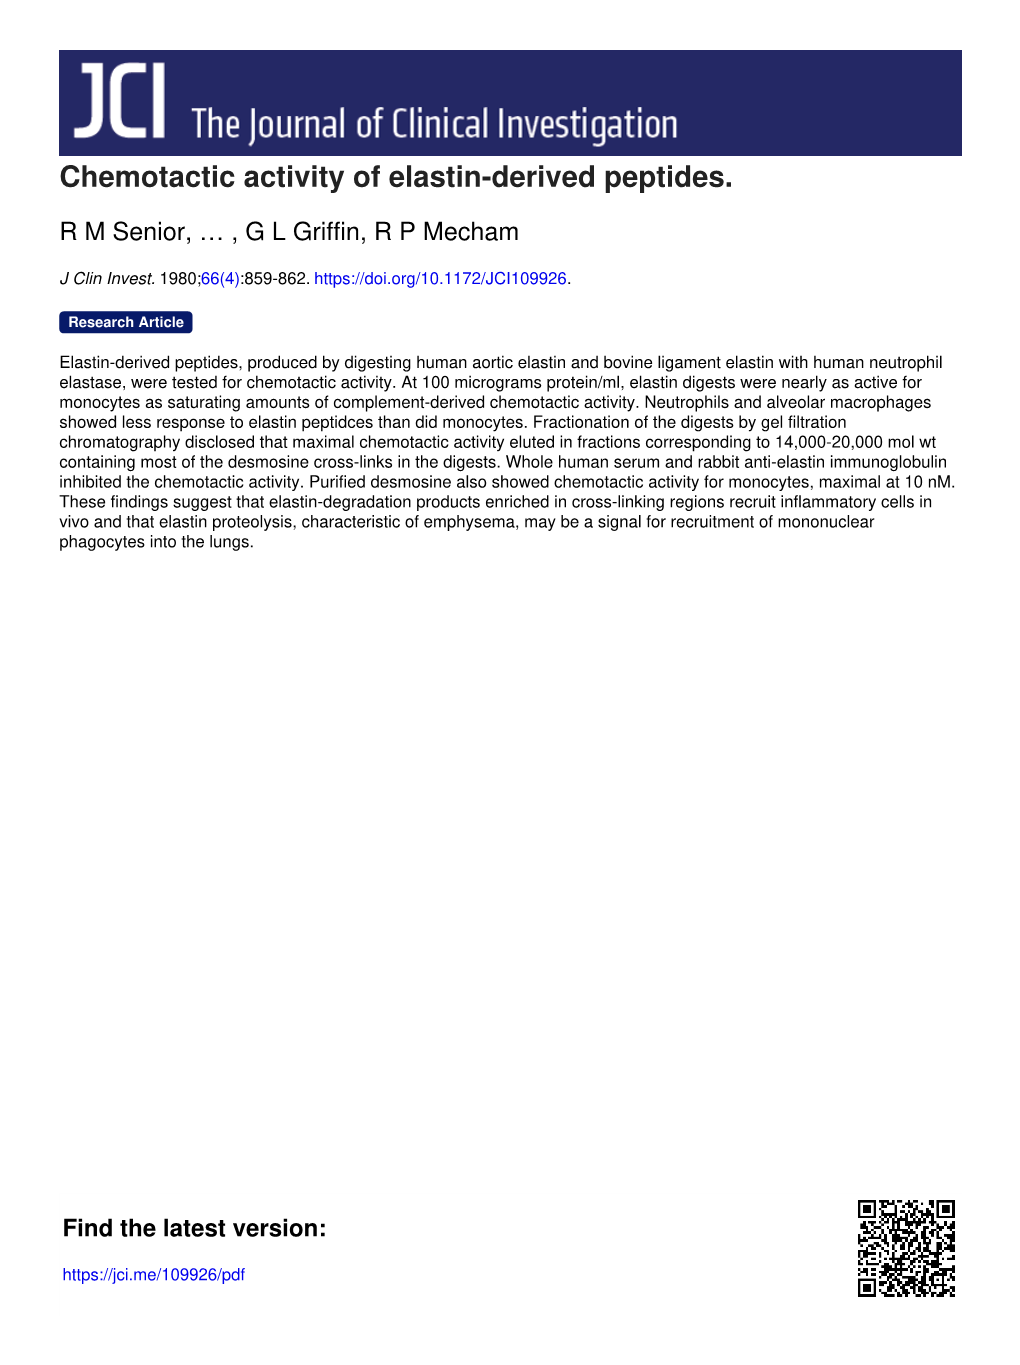 Chemotactic Activity of Elastin-Derived Peptides